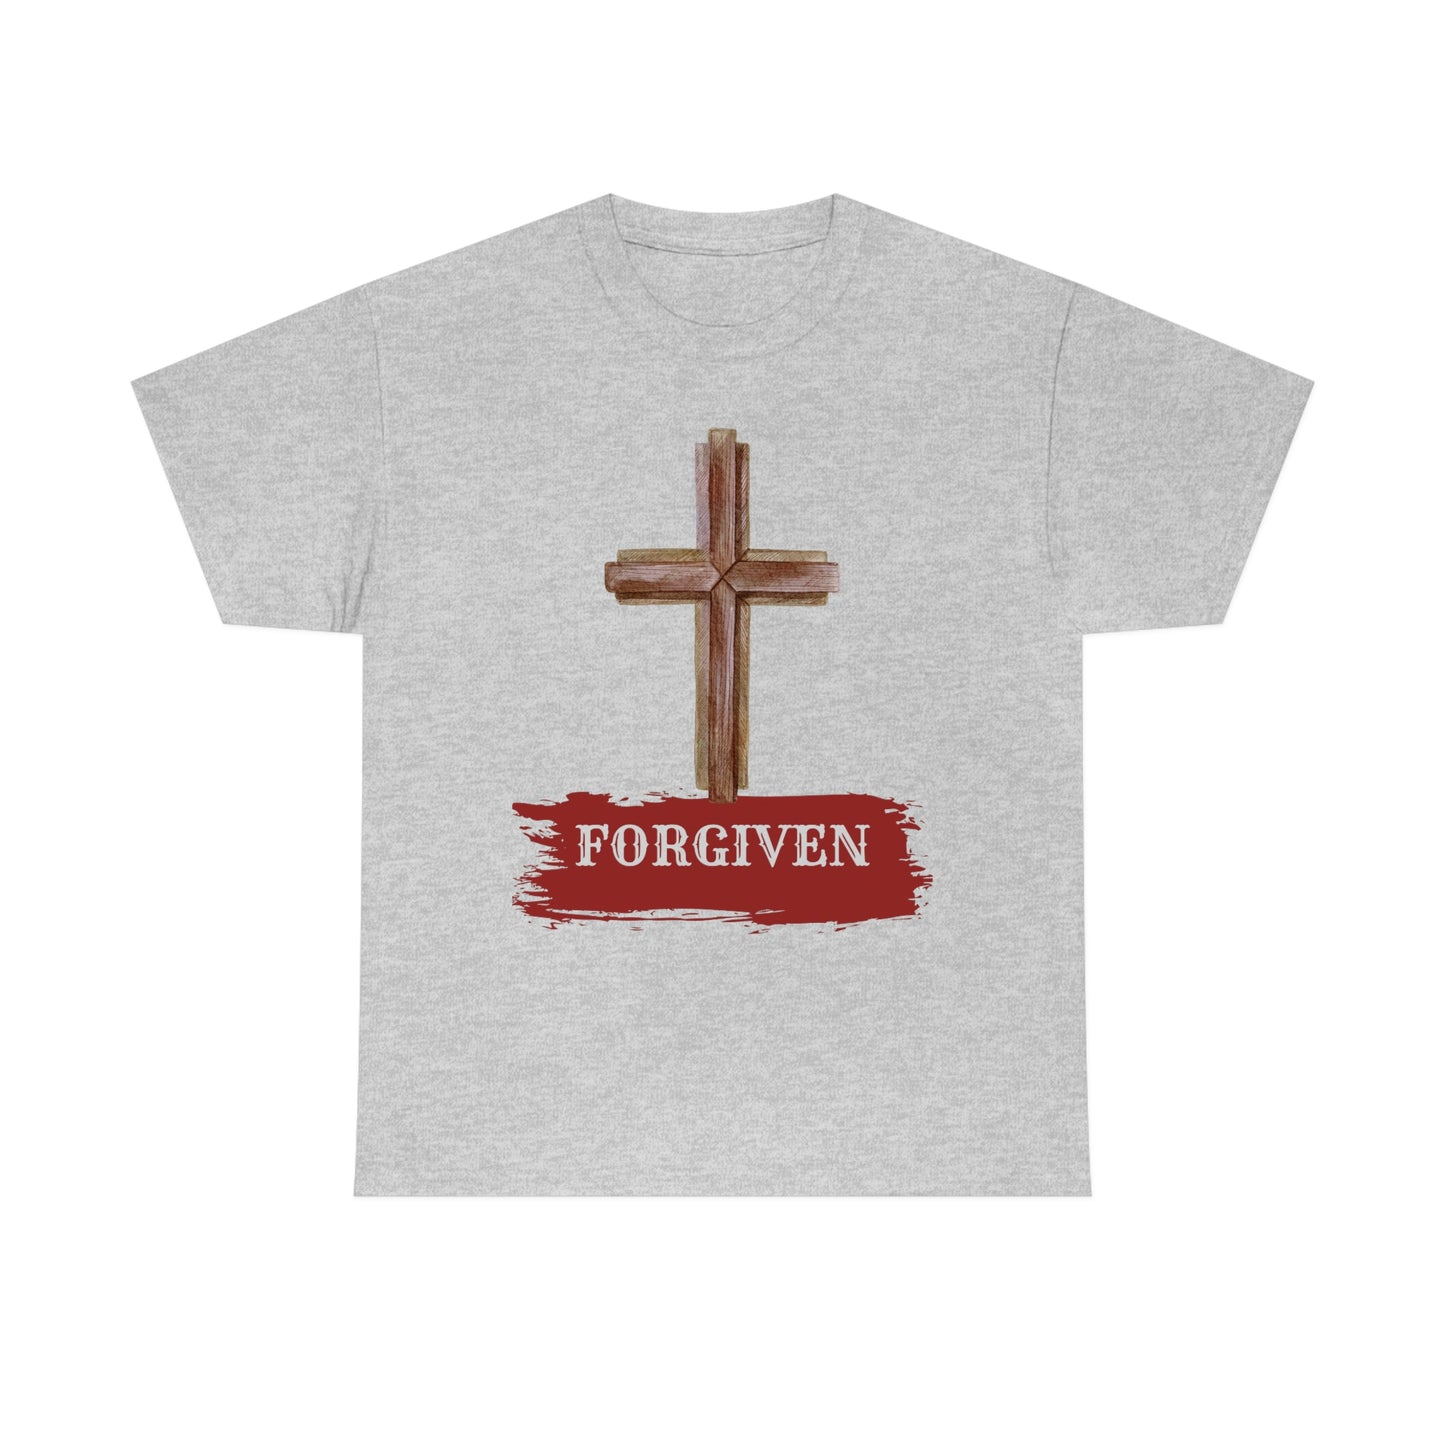 Forgiven - Mens's Christian Cotton Tee